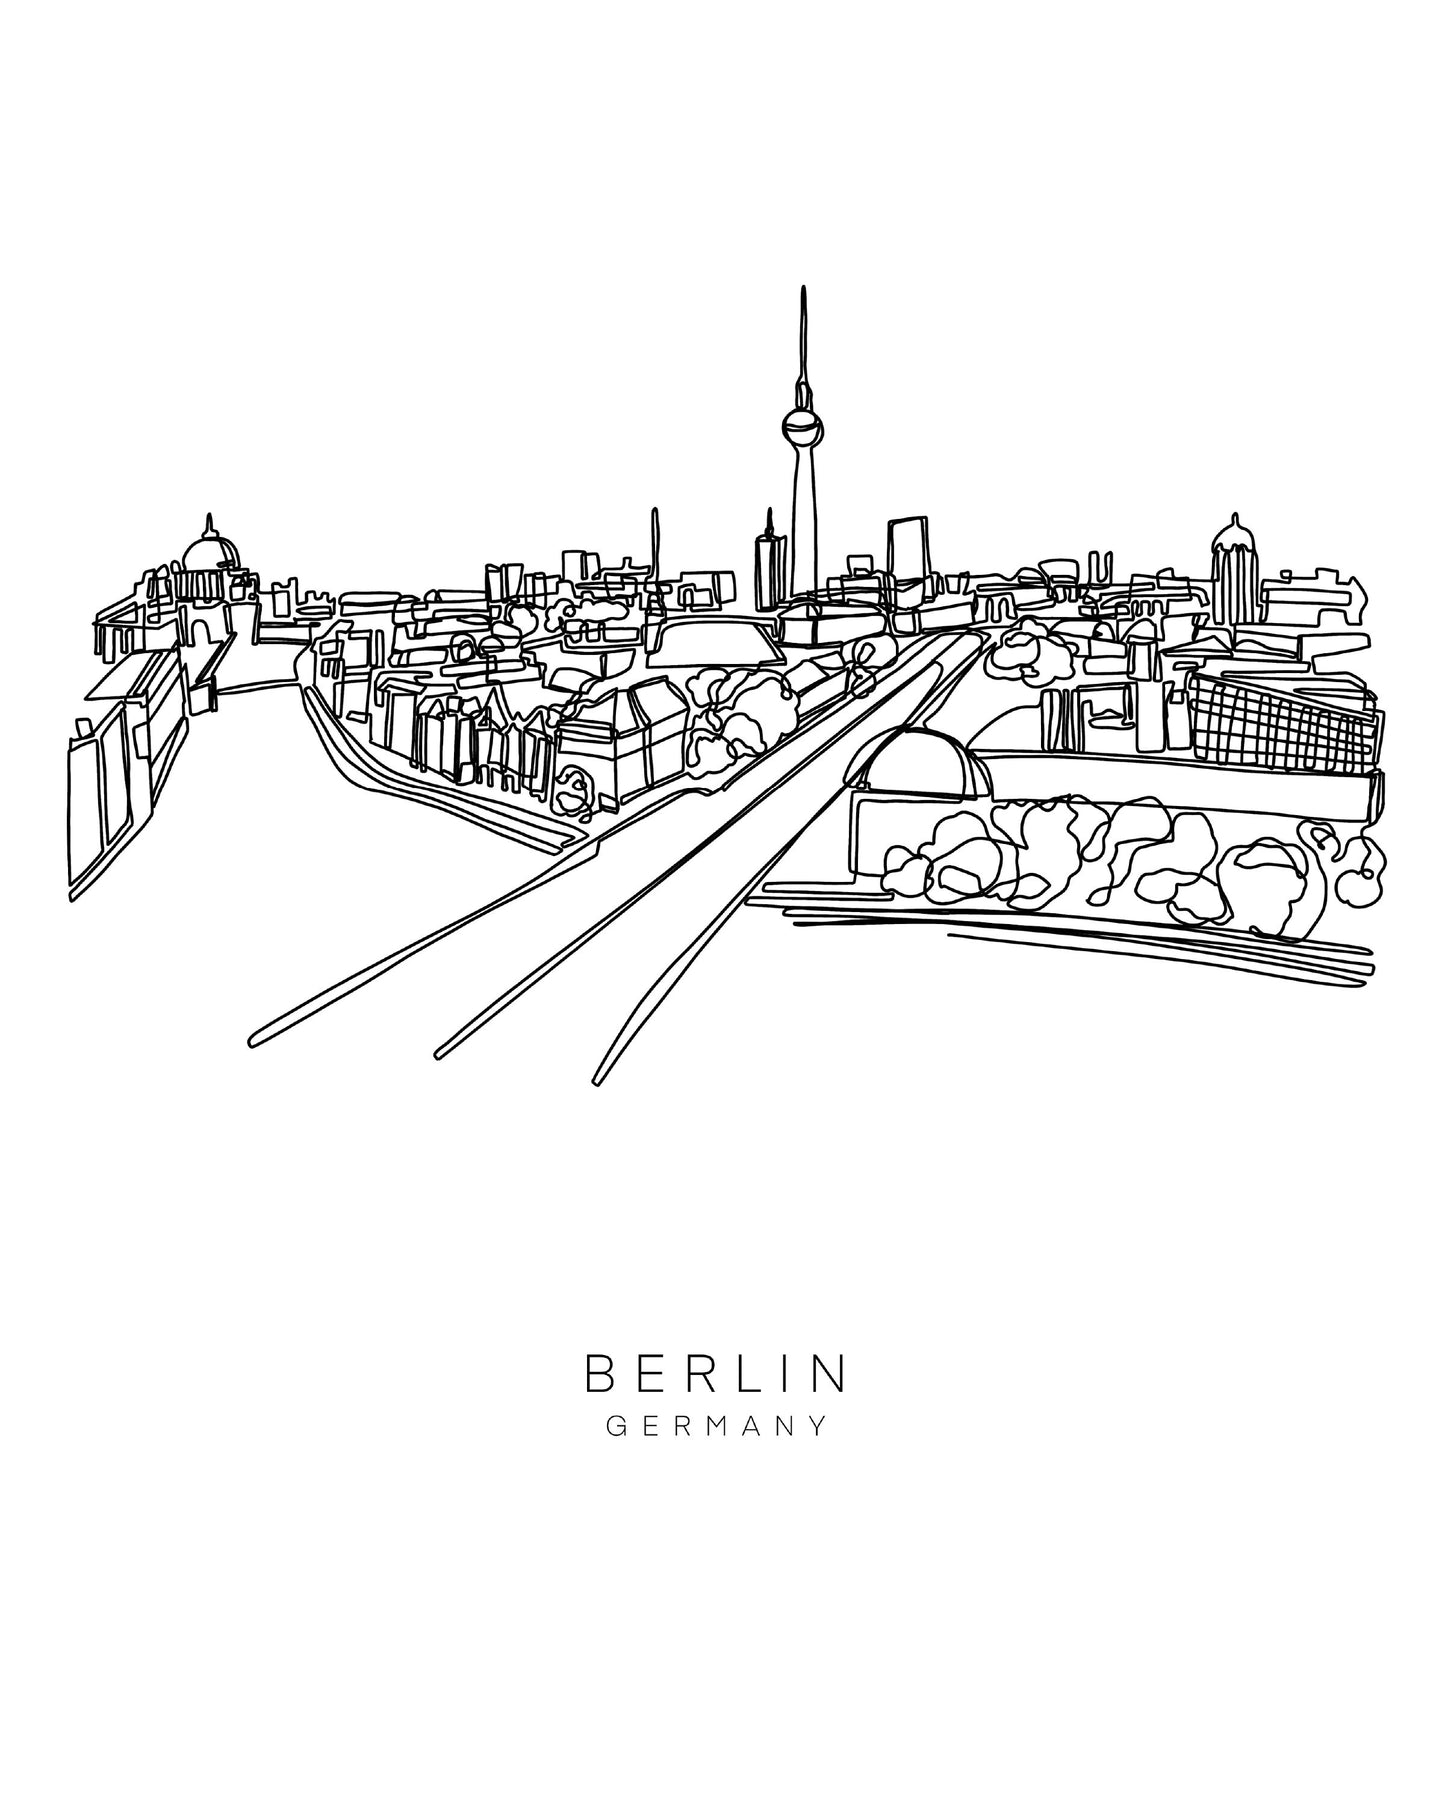 BERLIN Skyline 8x10 Single Line Art Print // Black and White // Unframed